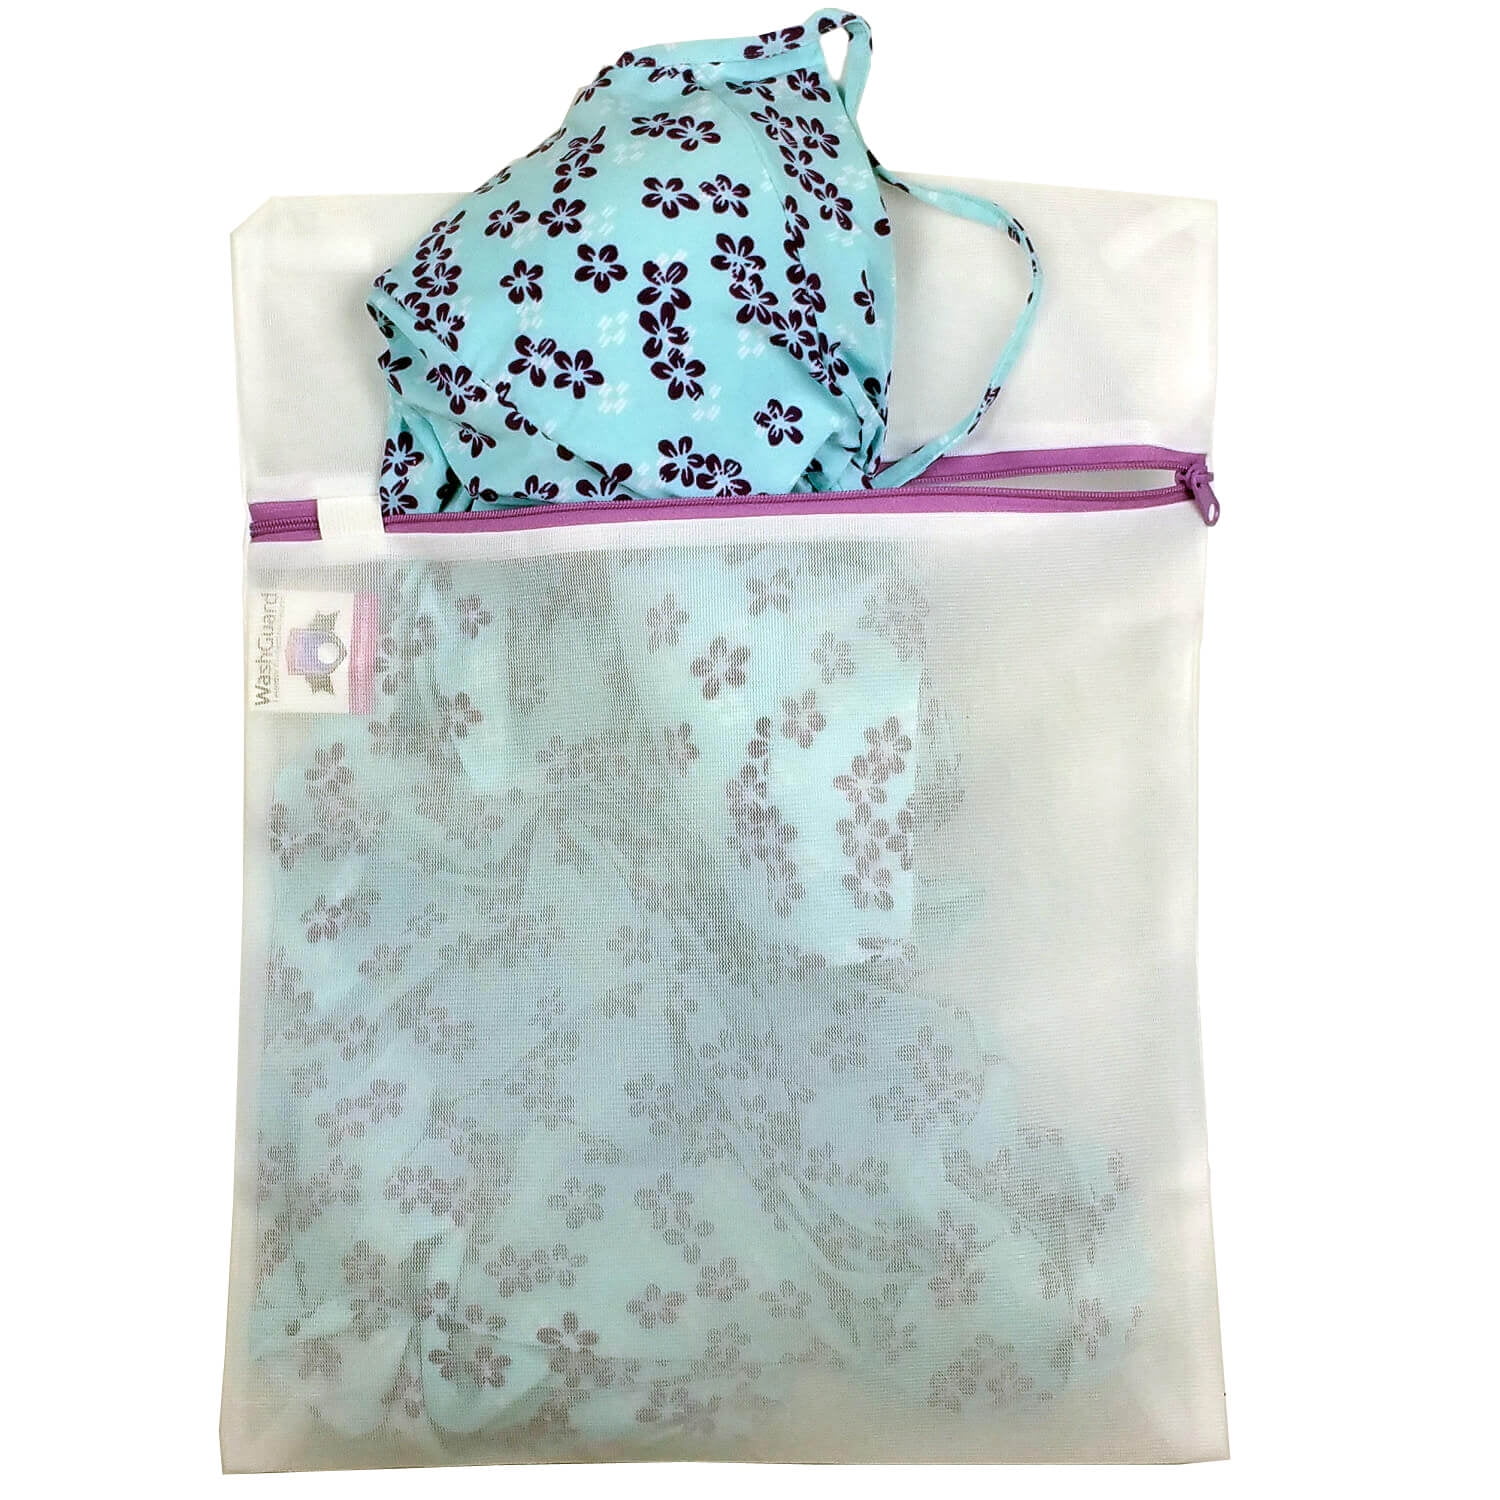 Rebrilliant Mesh Wash Bags / Lingerie Bags